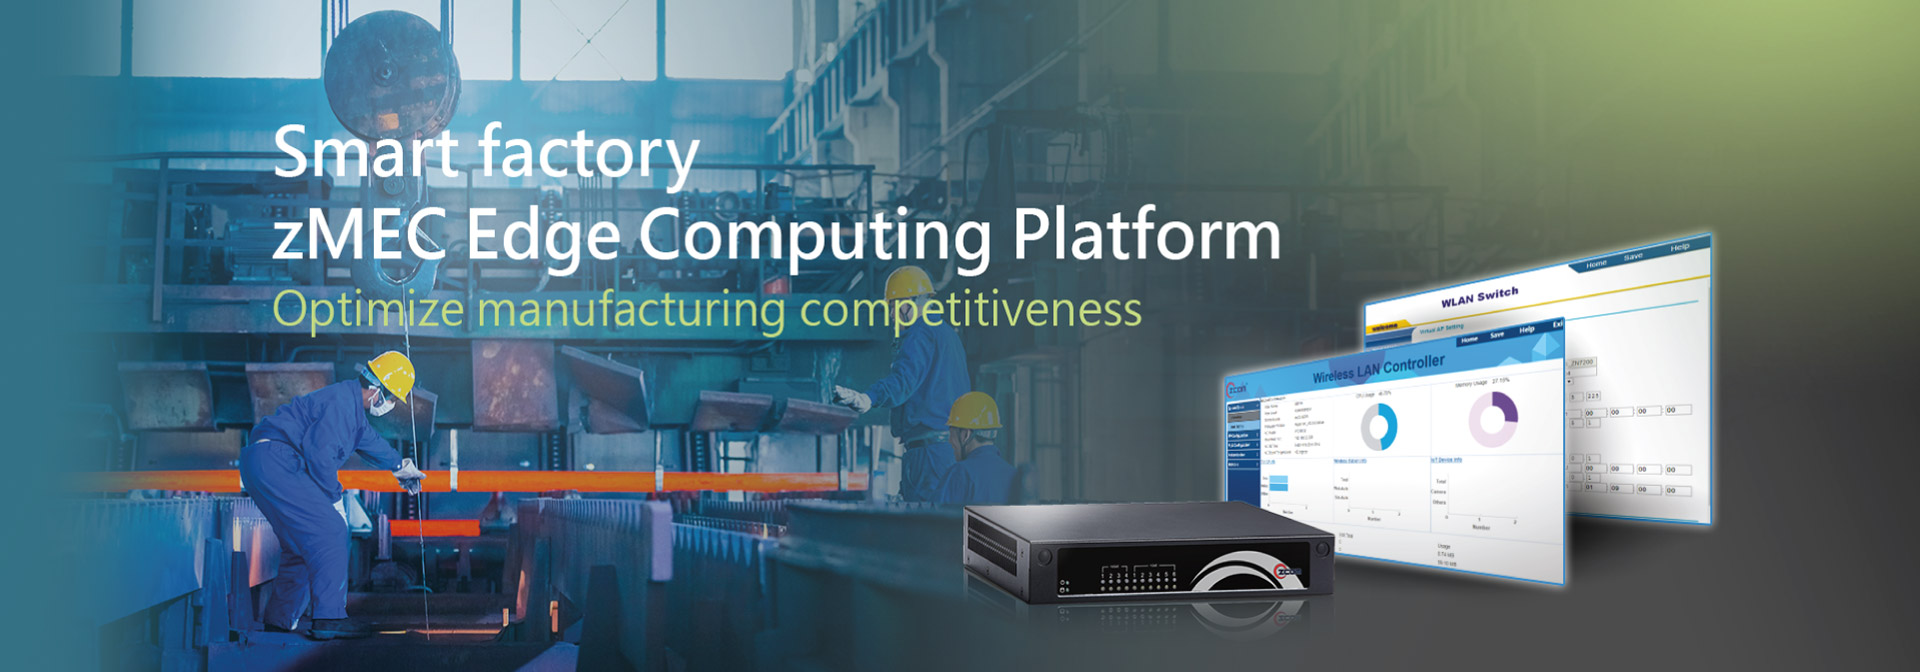 ifactory_Smart Manufacturing_Edge Computing